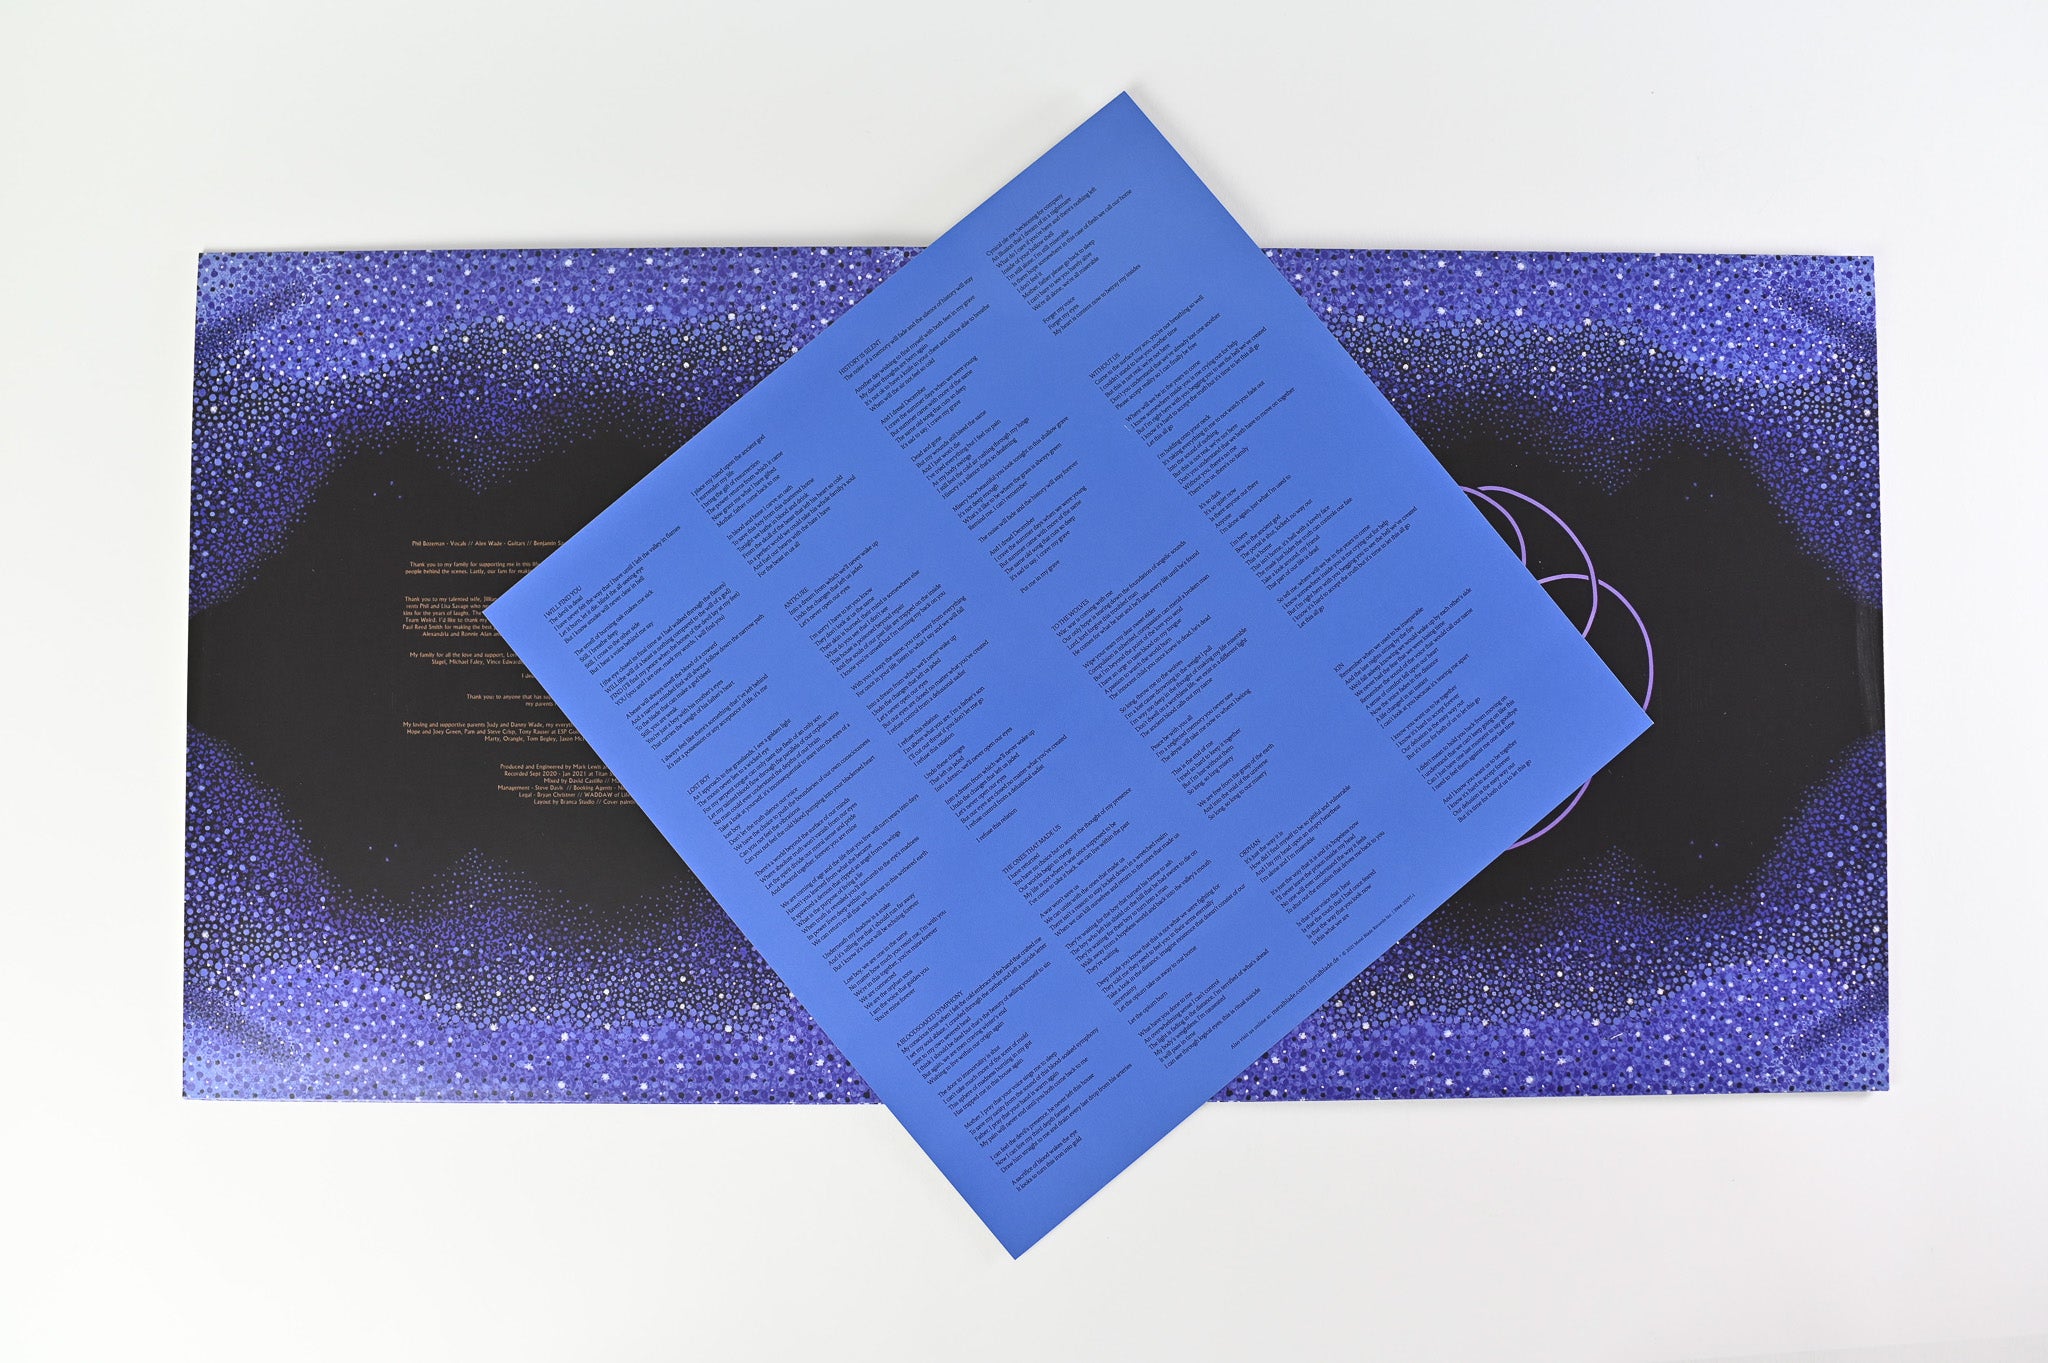 Whitechapel - Kin on Metal Blade Records Blue w/Aqua Blue Splatter Vinyl